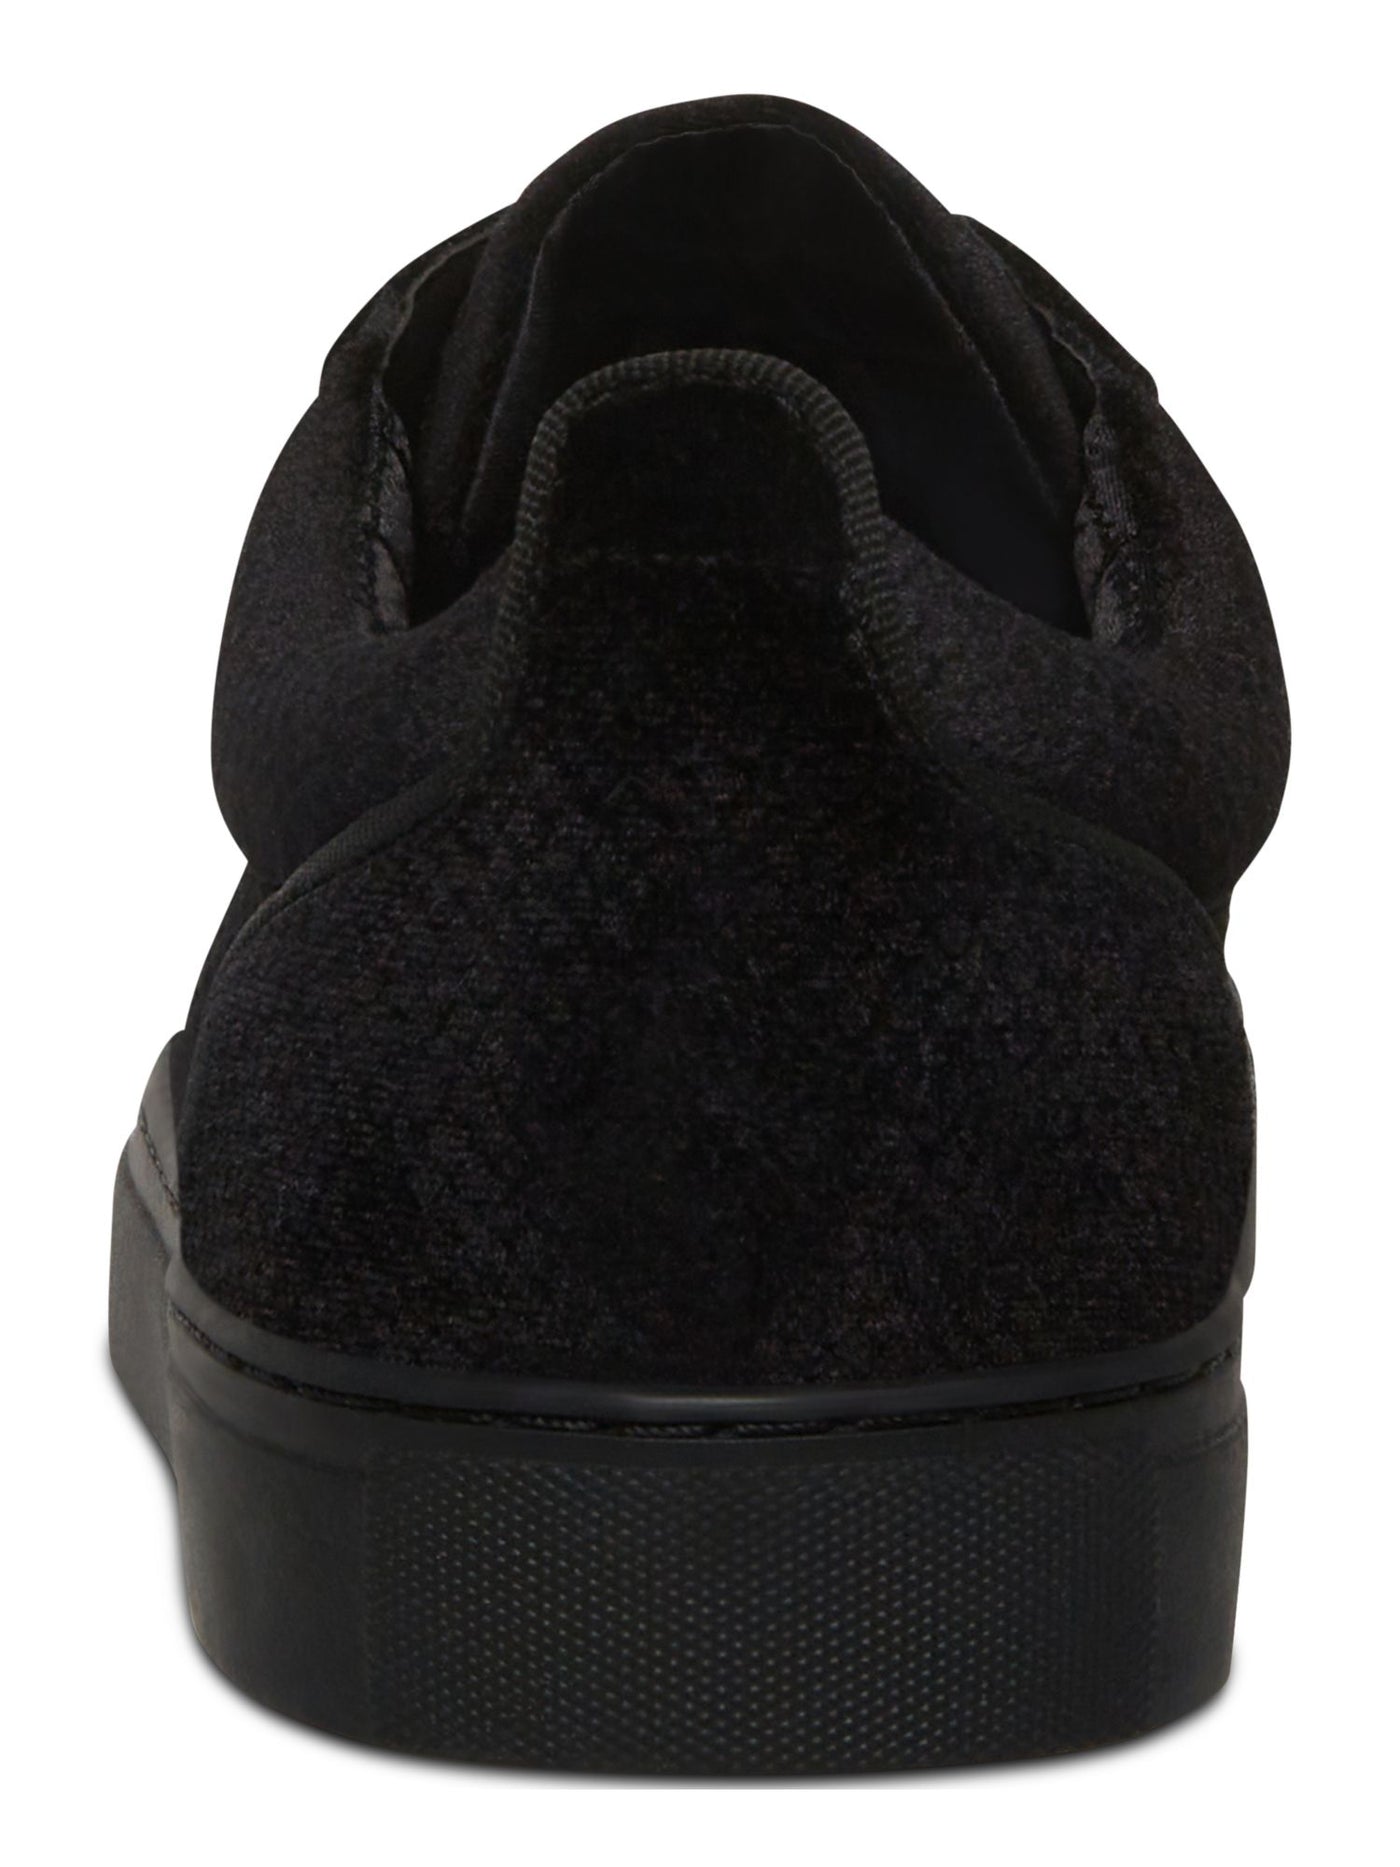 STEVE MADDEN Mens Black Snake Embossed Back Tab Yali Round Toe Lace-Up Velvet Sneakers Shoes 8